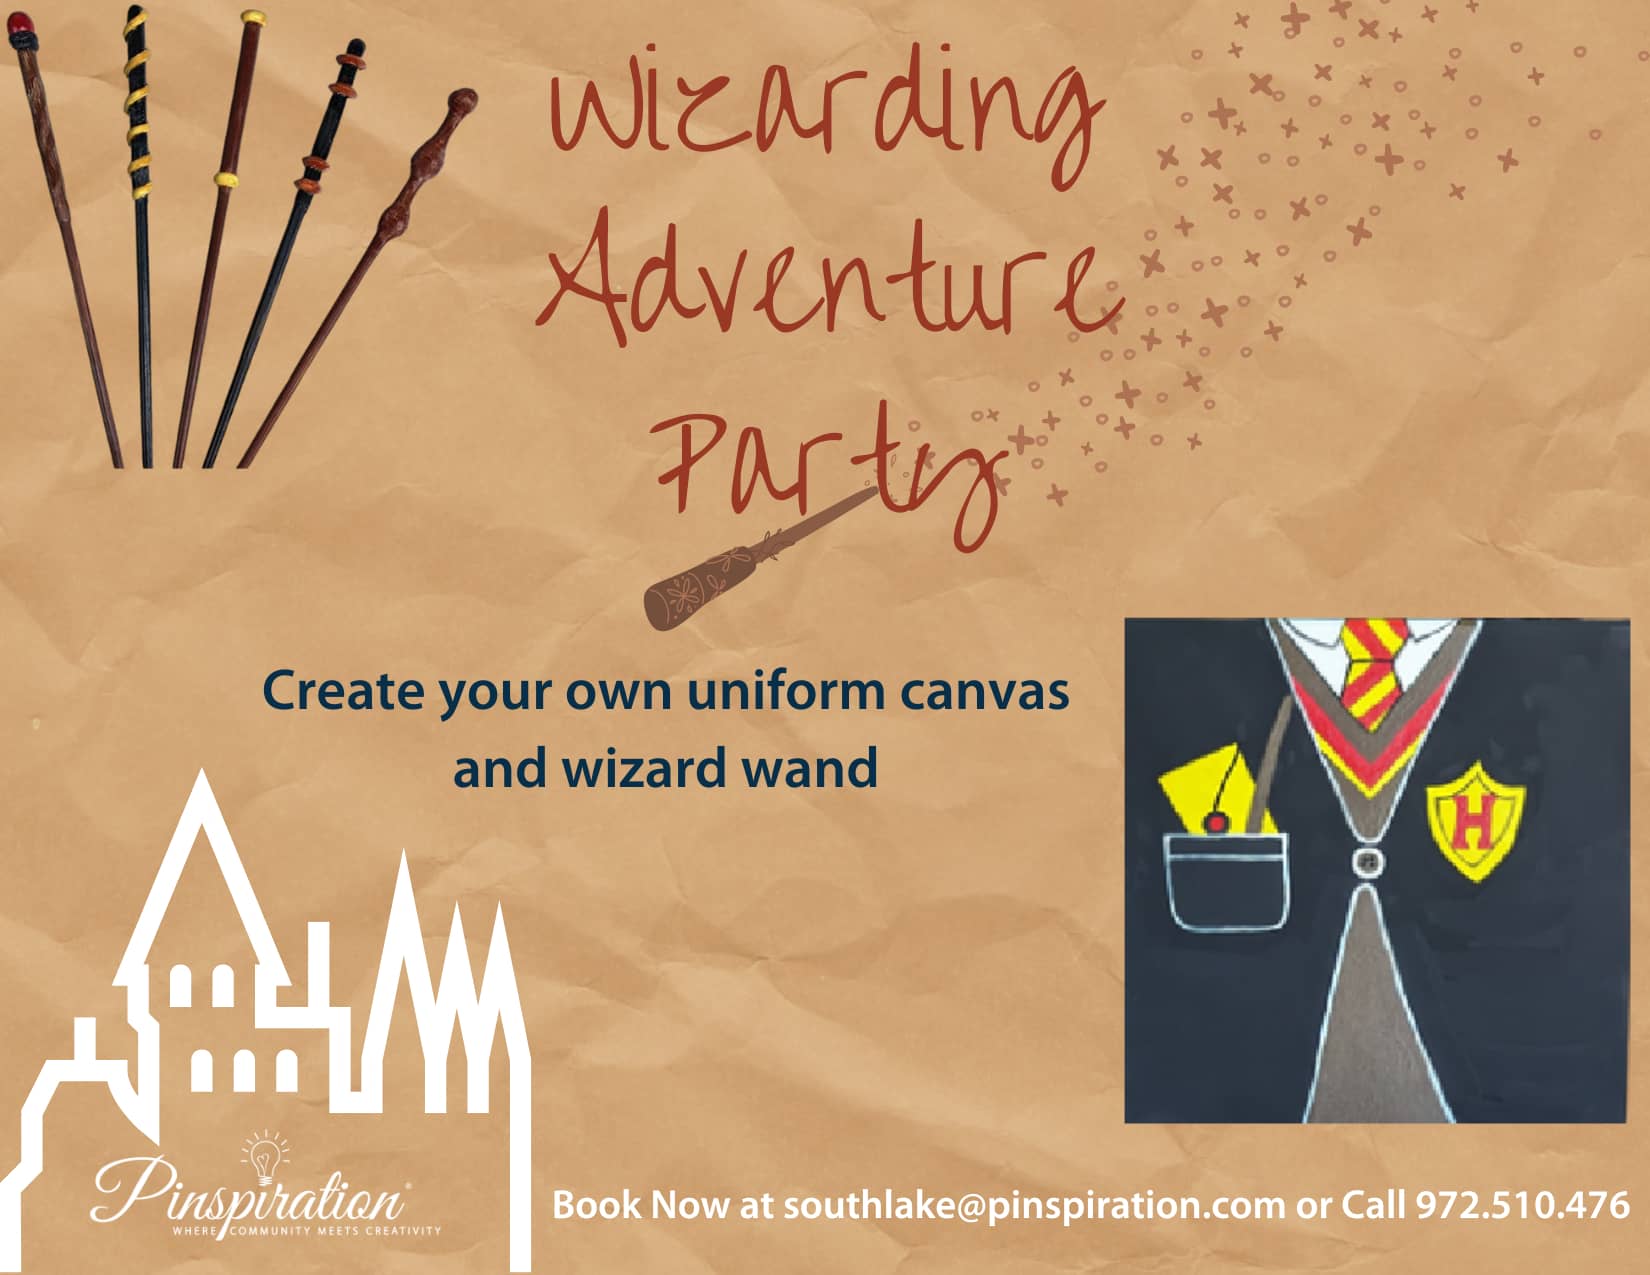 Southlake - Wizarding Adventure Party